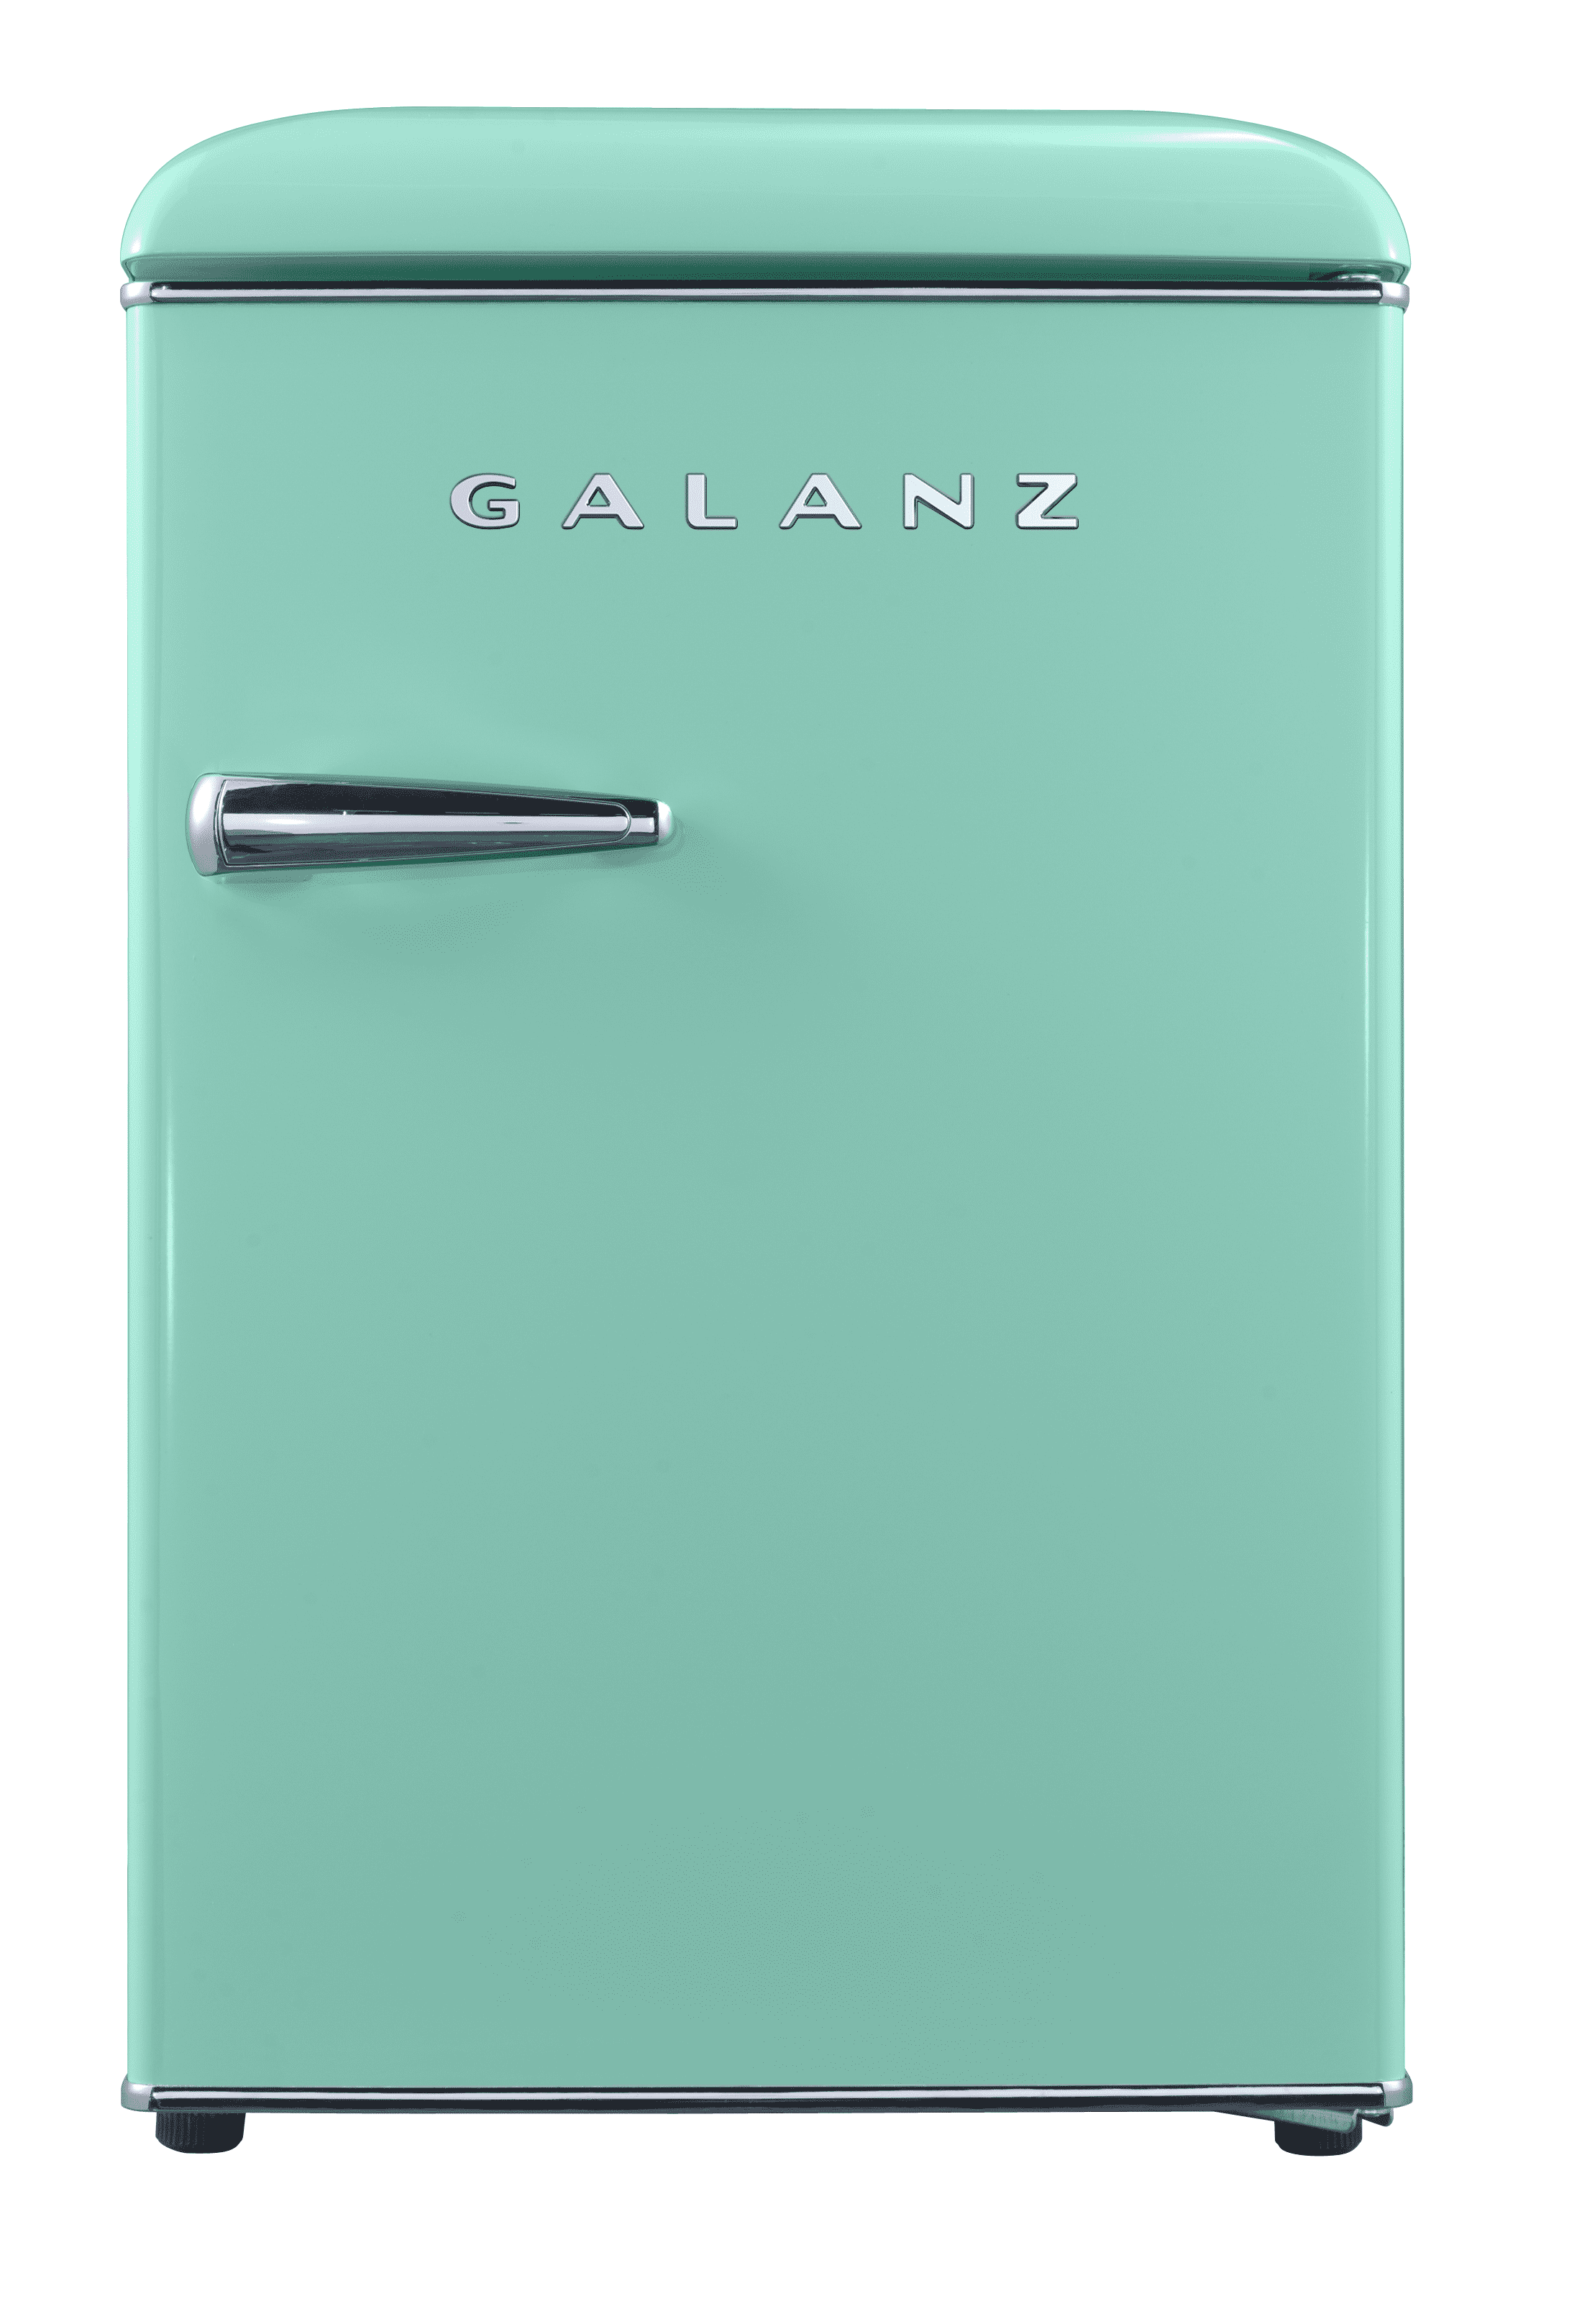 Who Makes Galanz Refrigerators – Press To Cook